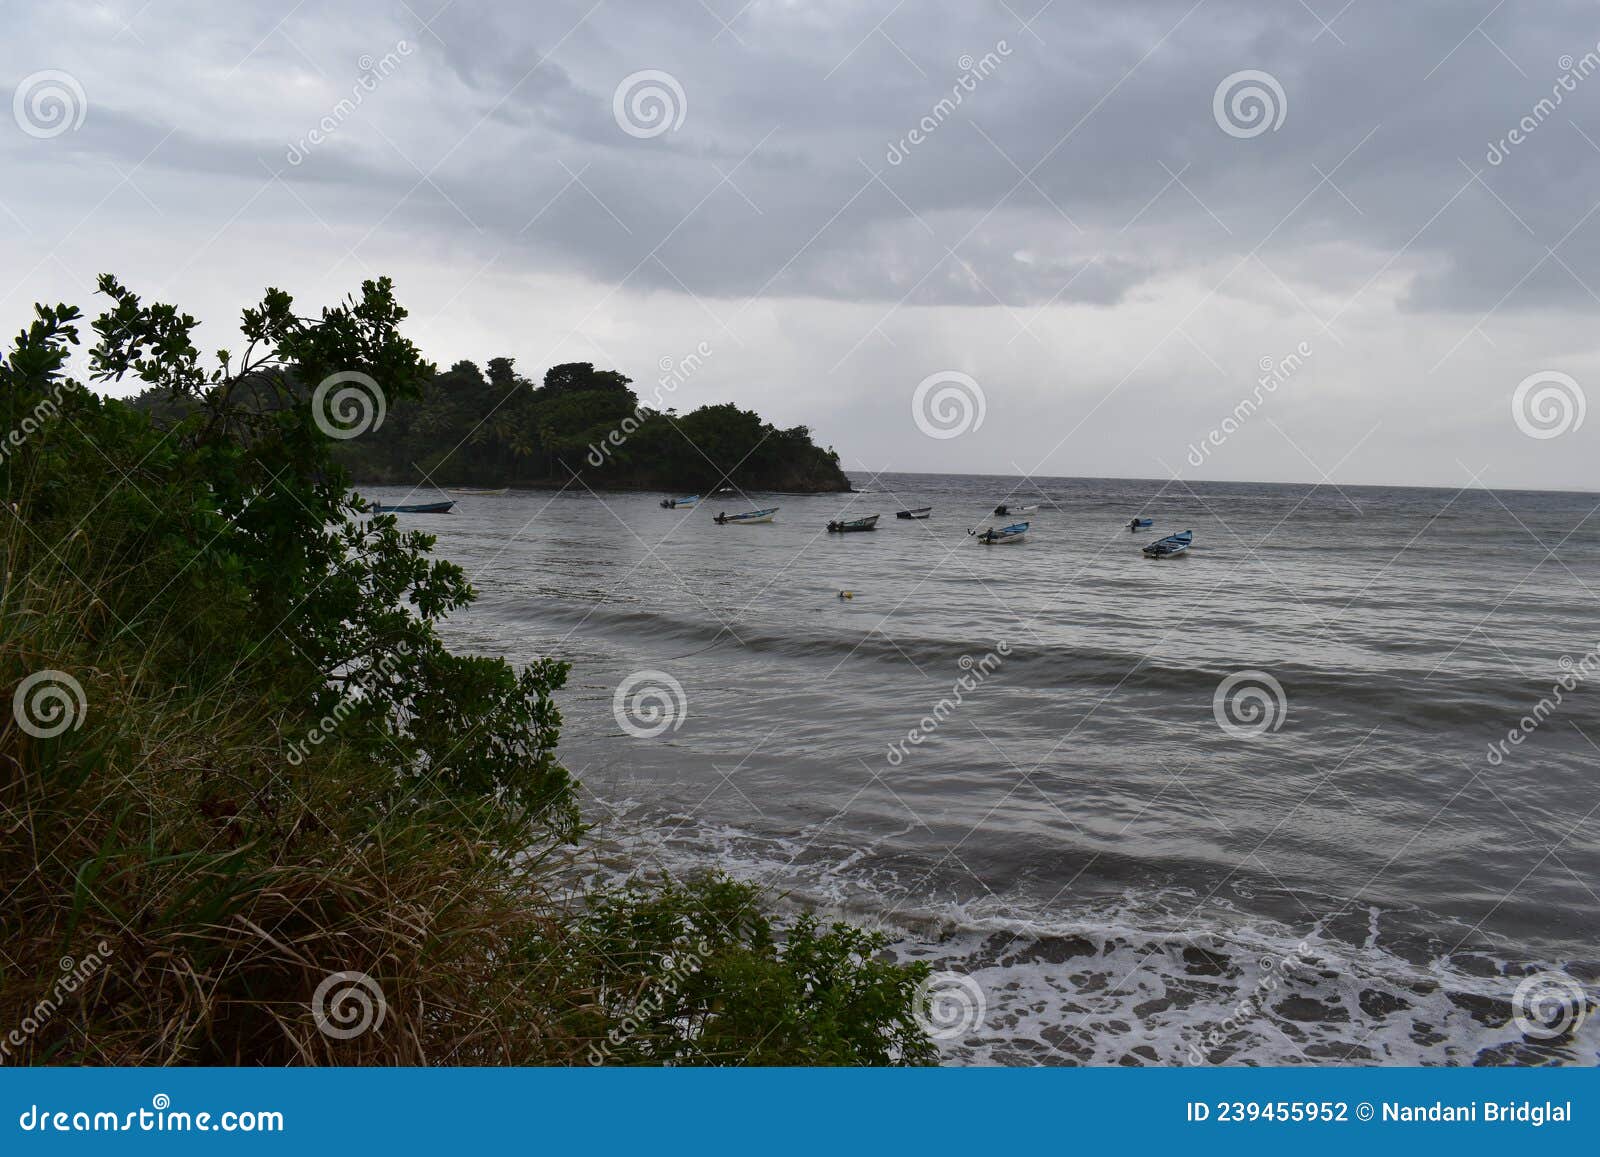 fishing boats in the balandra bay, trinidad